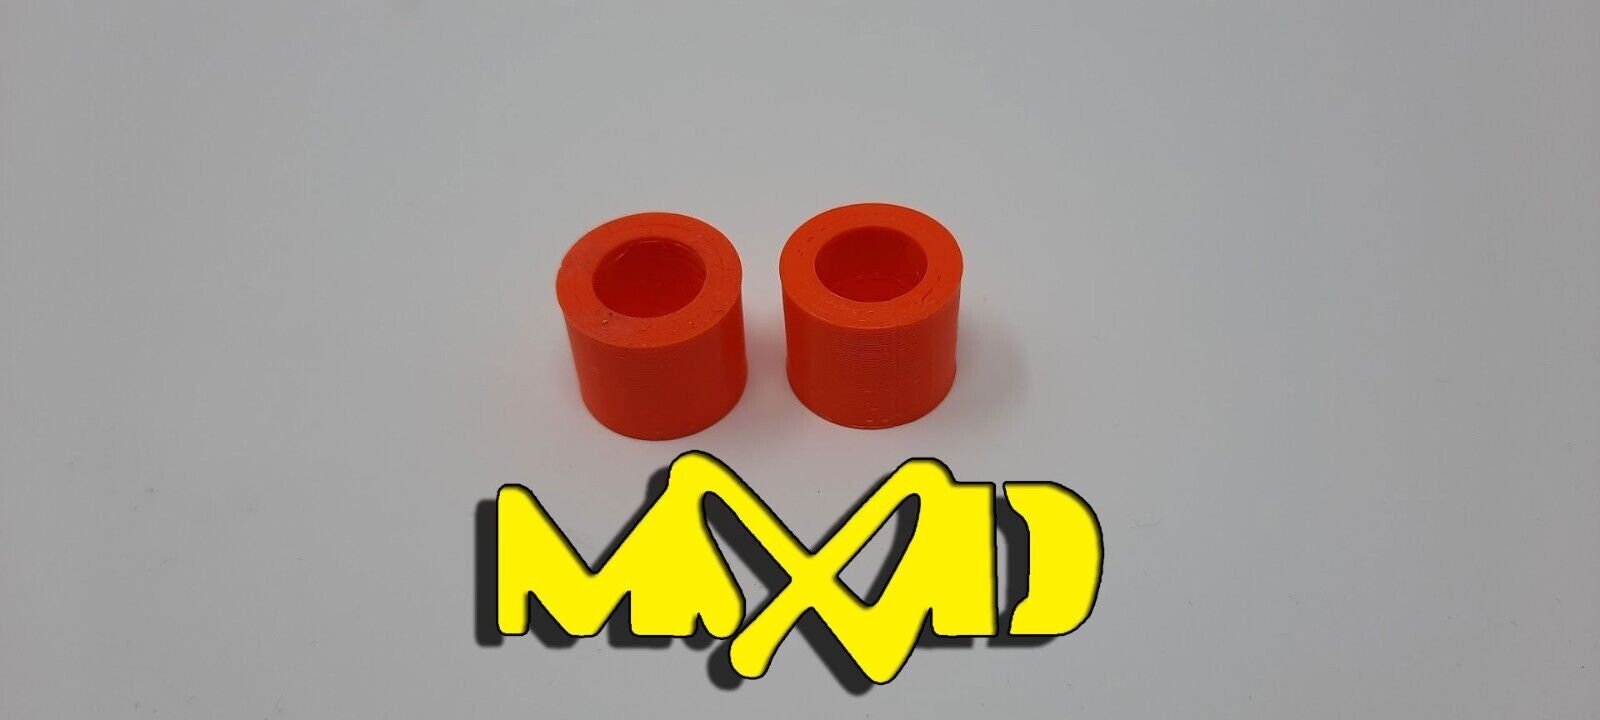 cricut maker rubber roller replacement｜TikTok Search